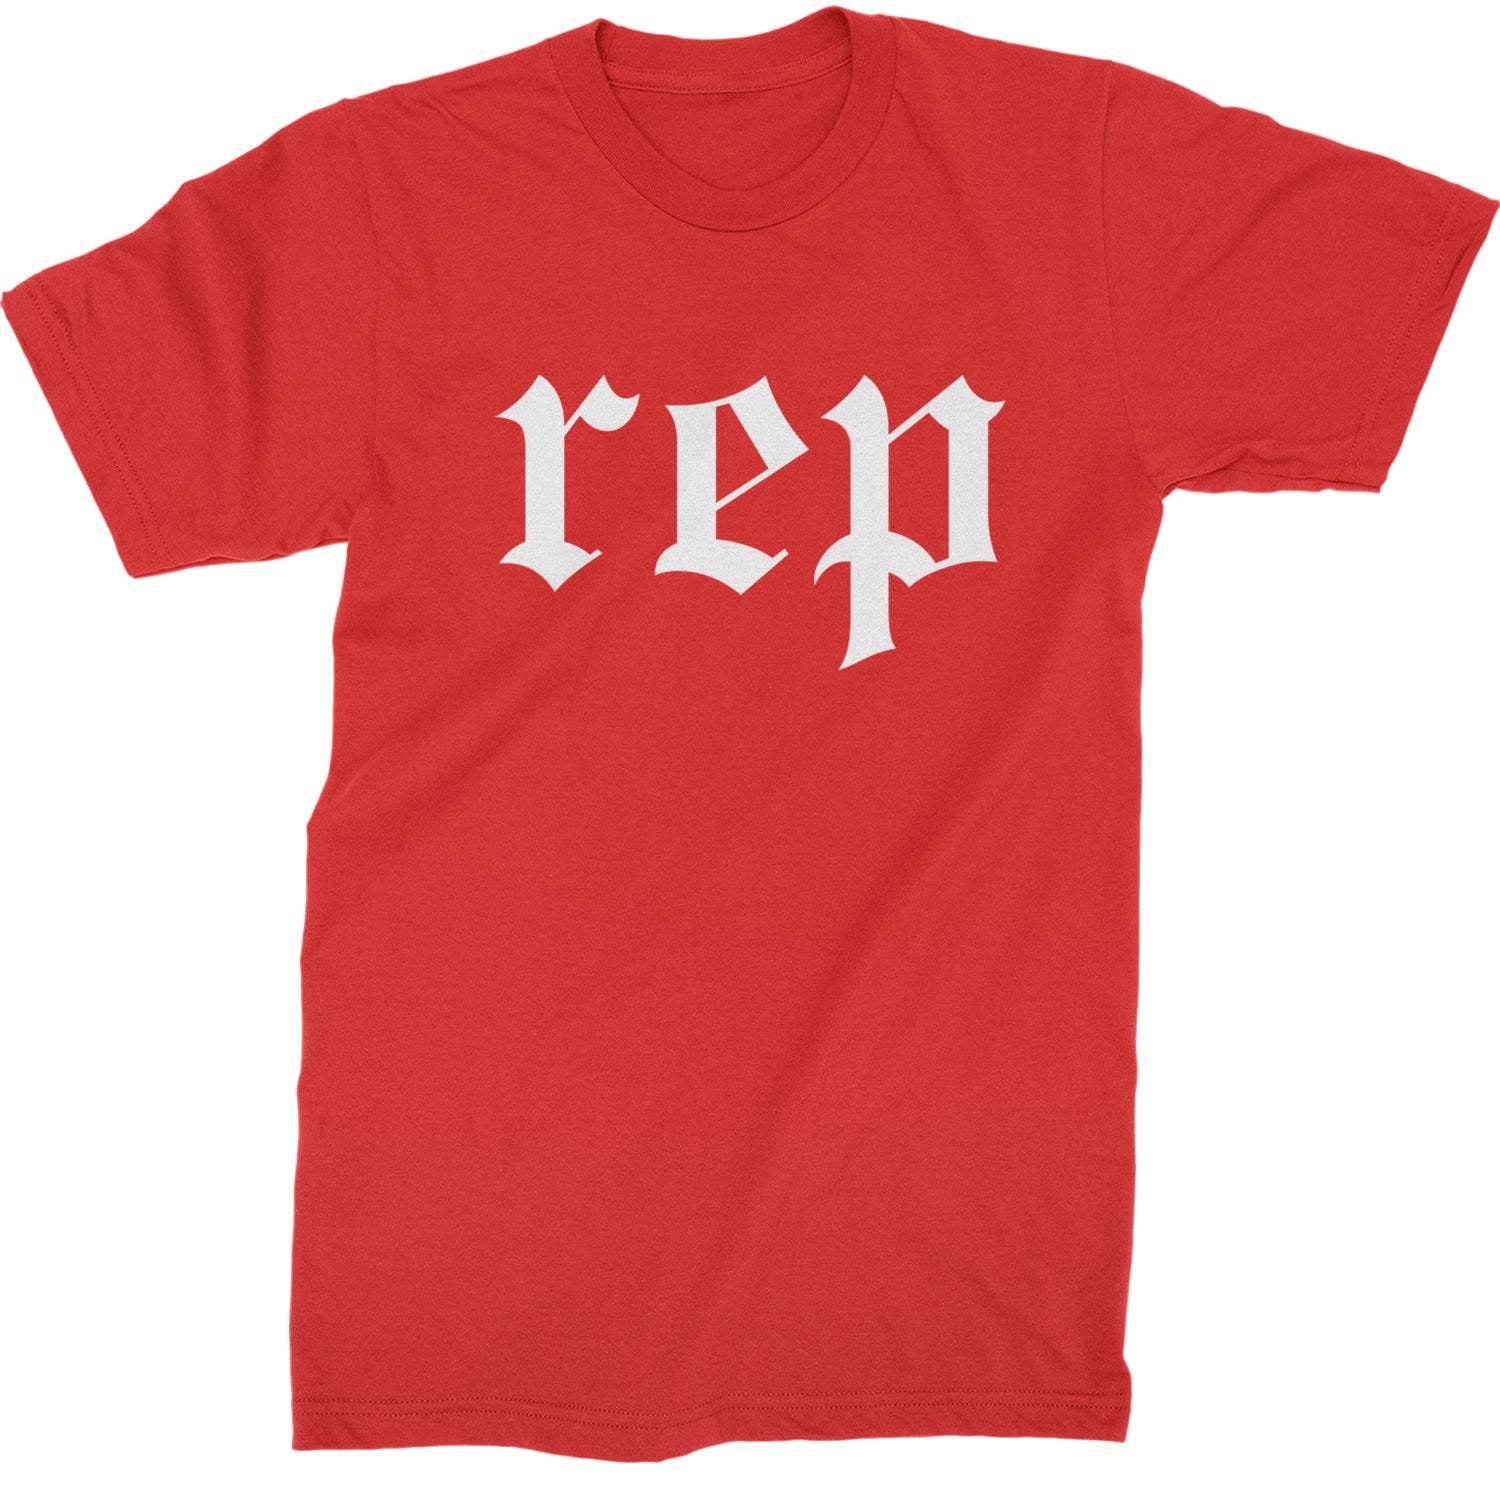 REP Reputation Eras Music Lover Gift Fan Favorite Mens T-shirt Red